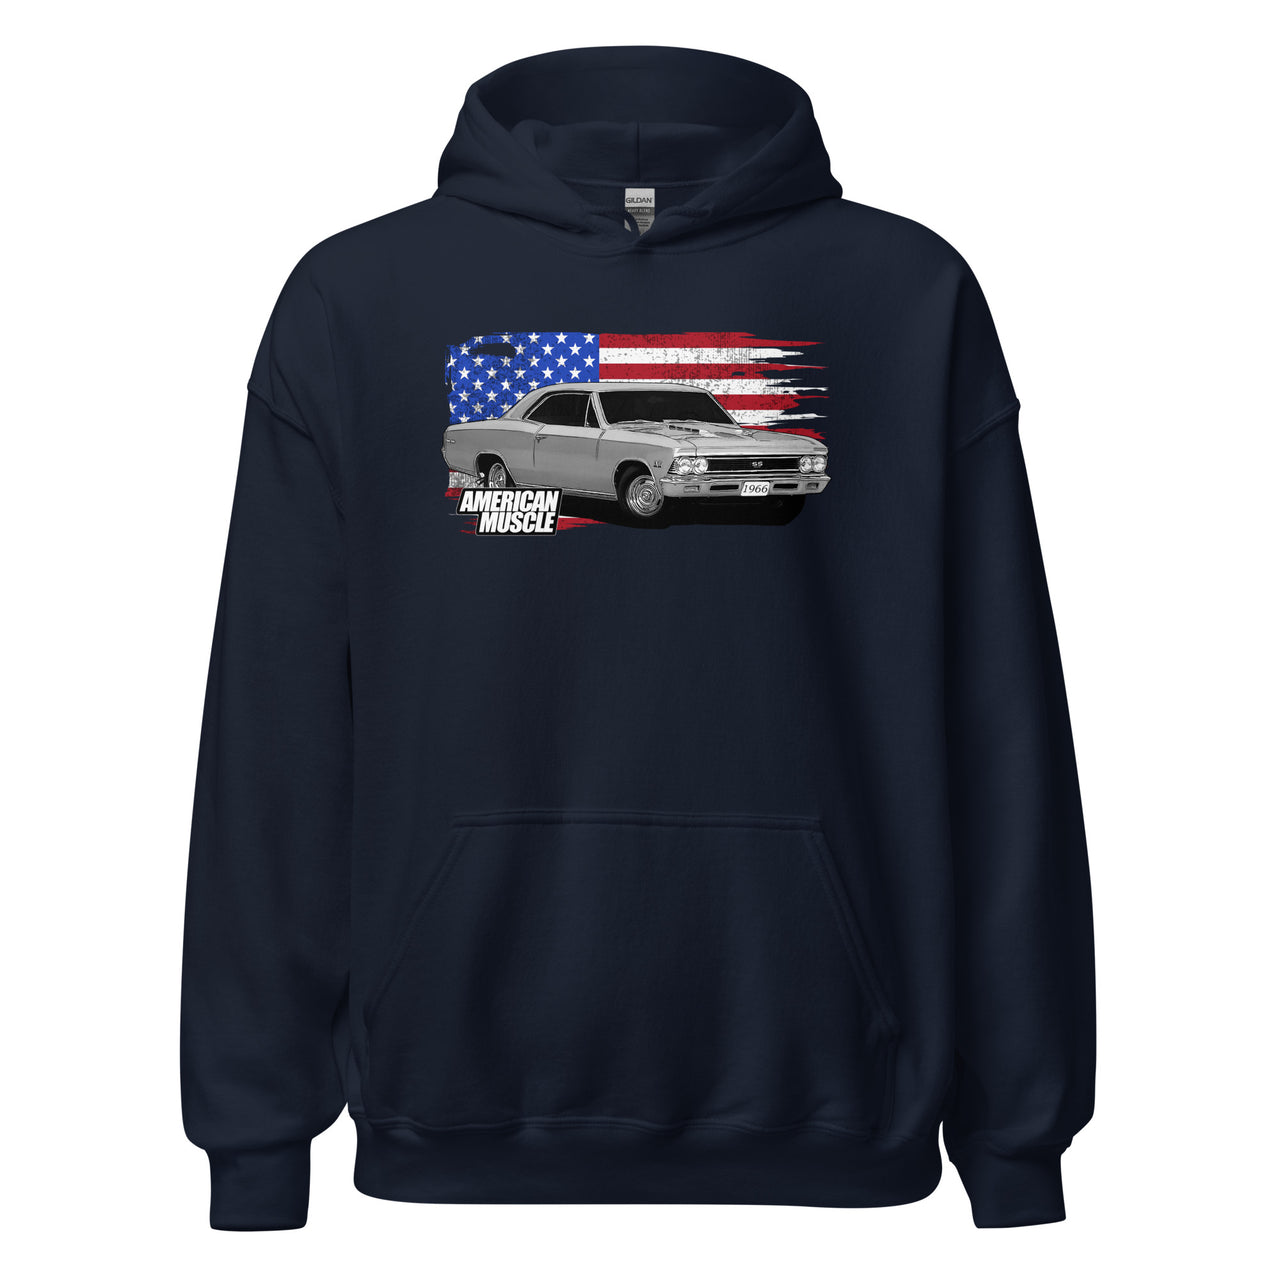 1966 Chevelle Car Hoodie Sweatshirt With American Flag design - in navy